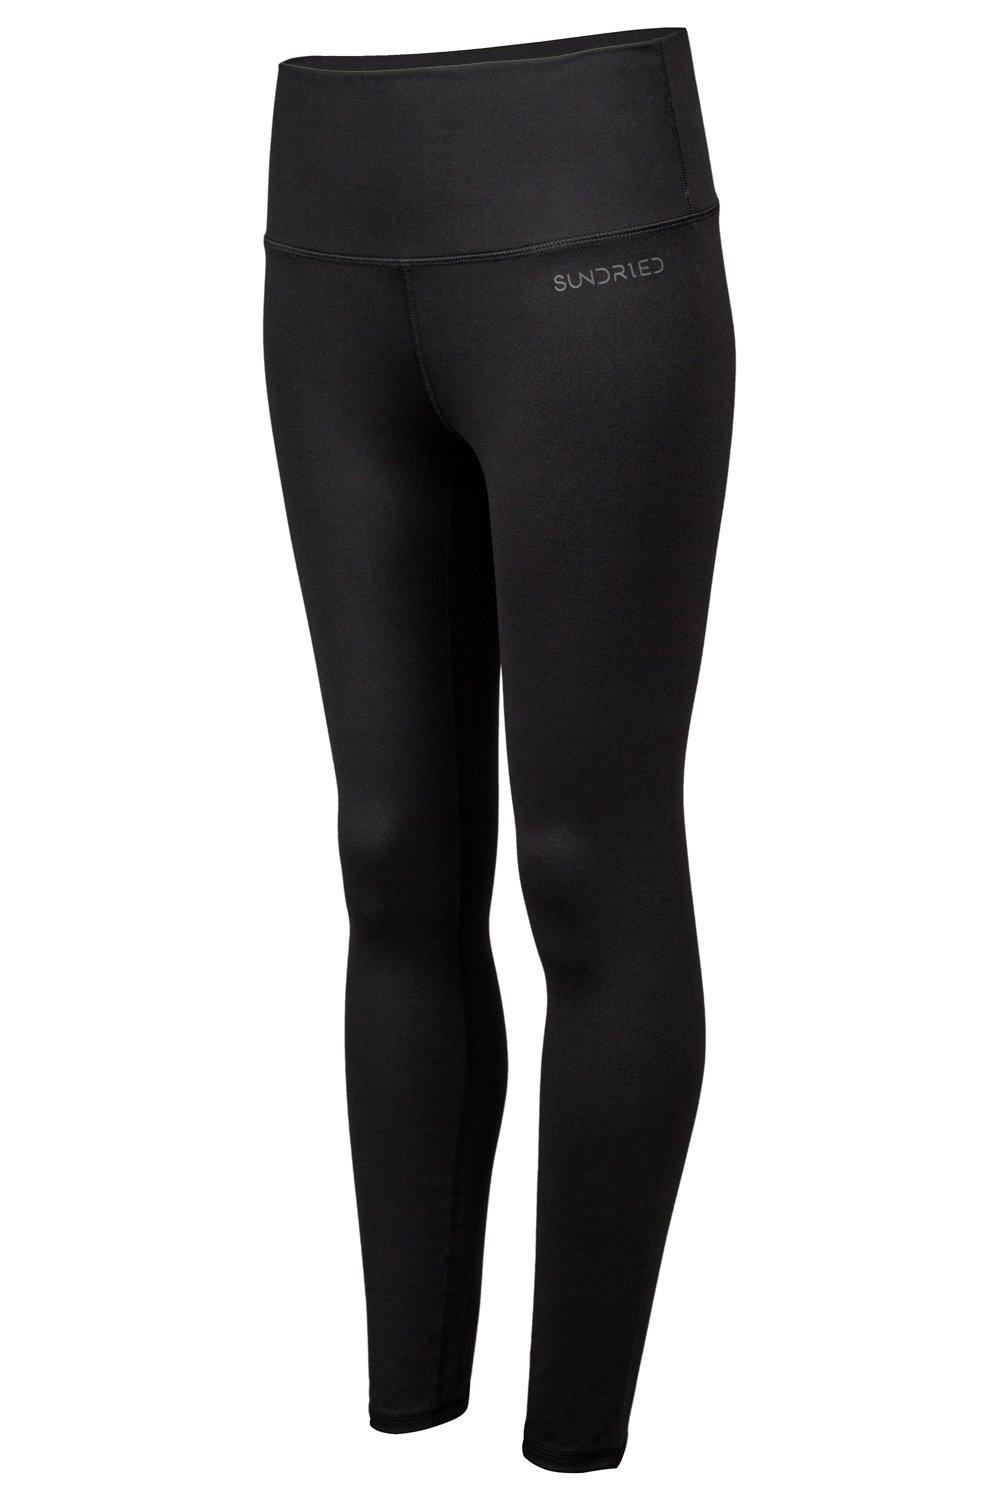 Sundried Women's Sport Leggings Leggings XL Black SD0236 XL Black Activewear